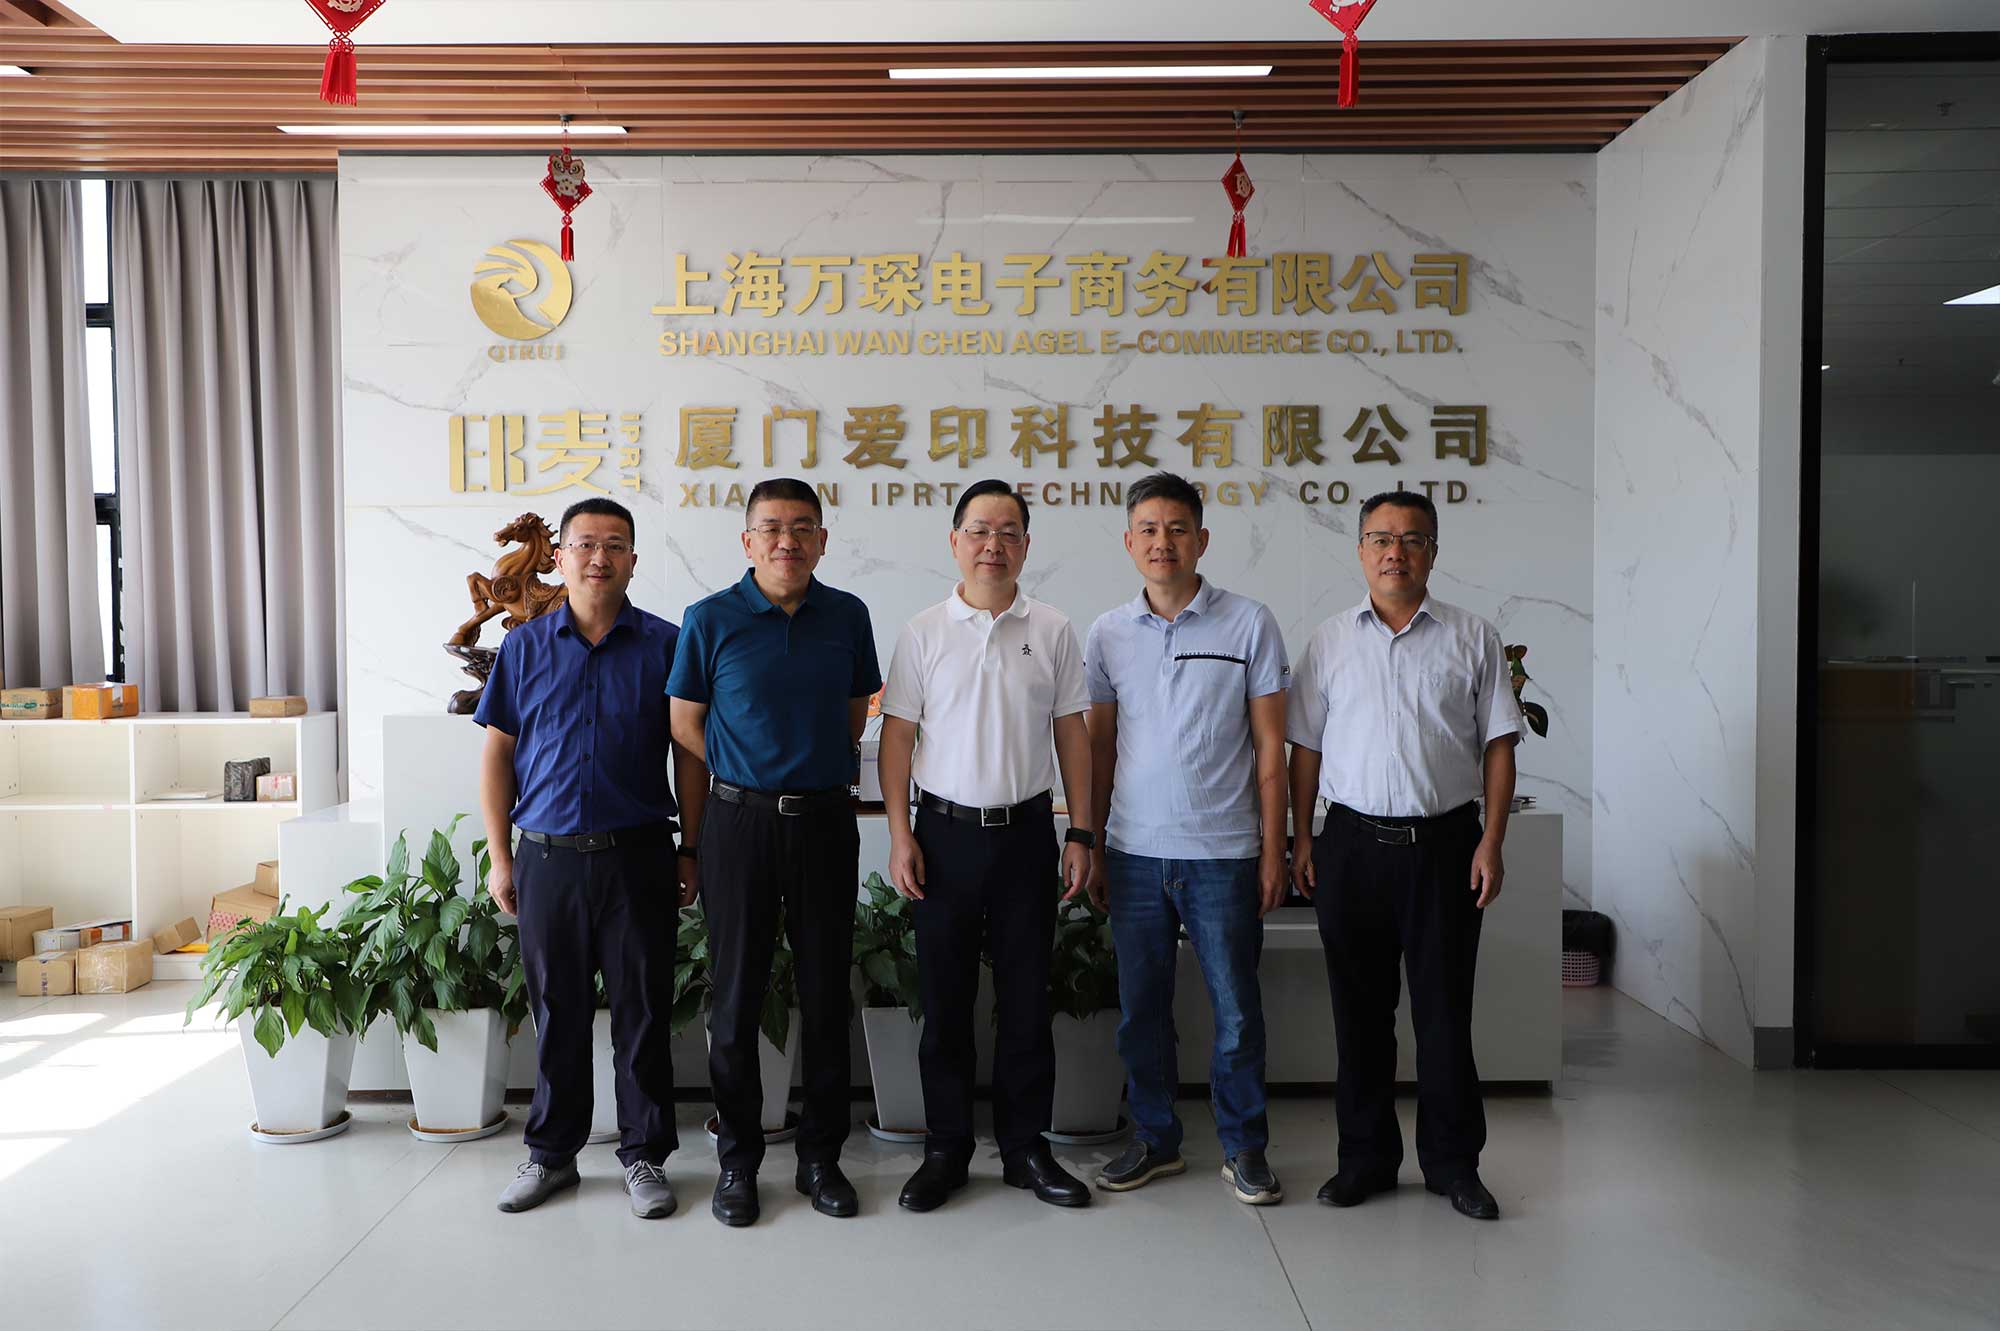 Xiamen CPPCC Li Qinhui 부회장 등이 조사 및 안내를 위해 IPRT Technology를 방문했습니다.